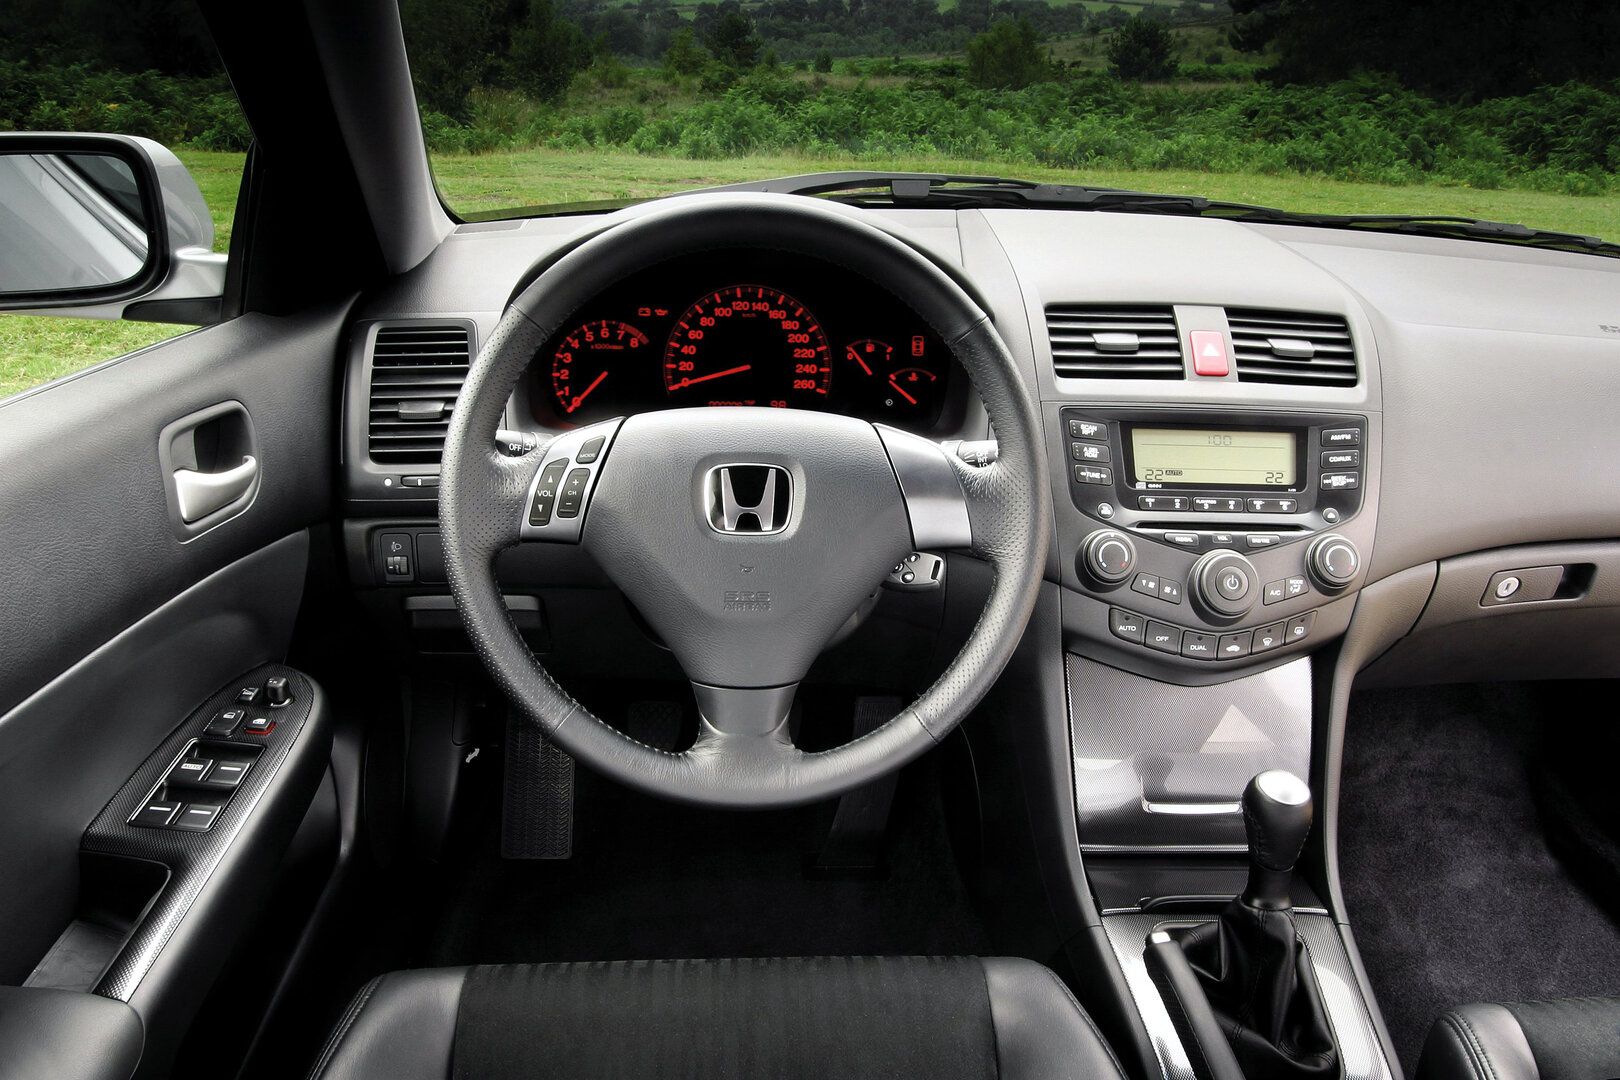 Honda Accord interior CL7 2003 1